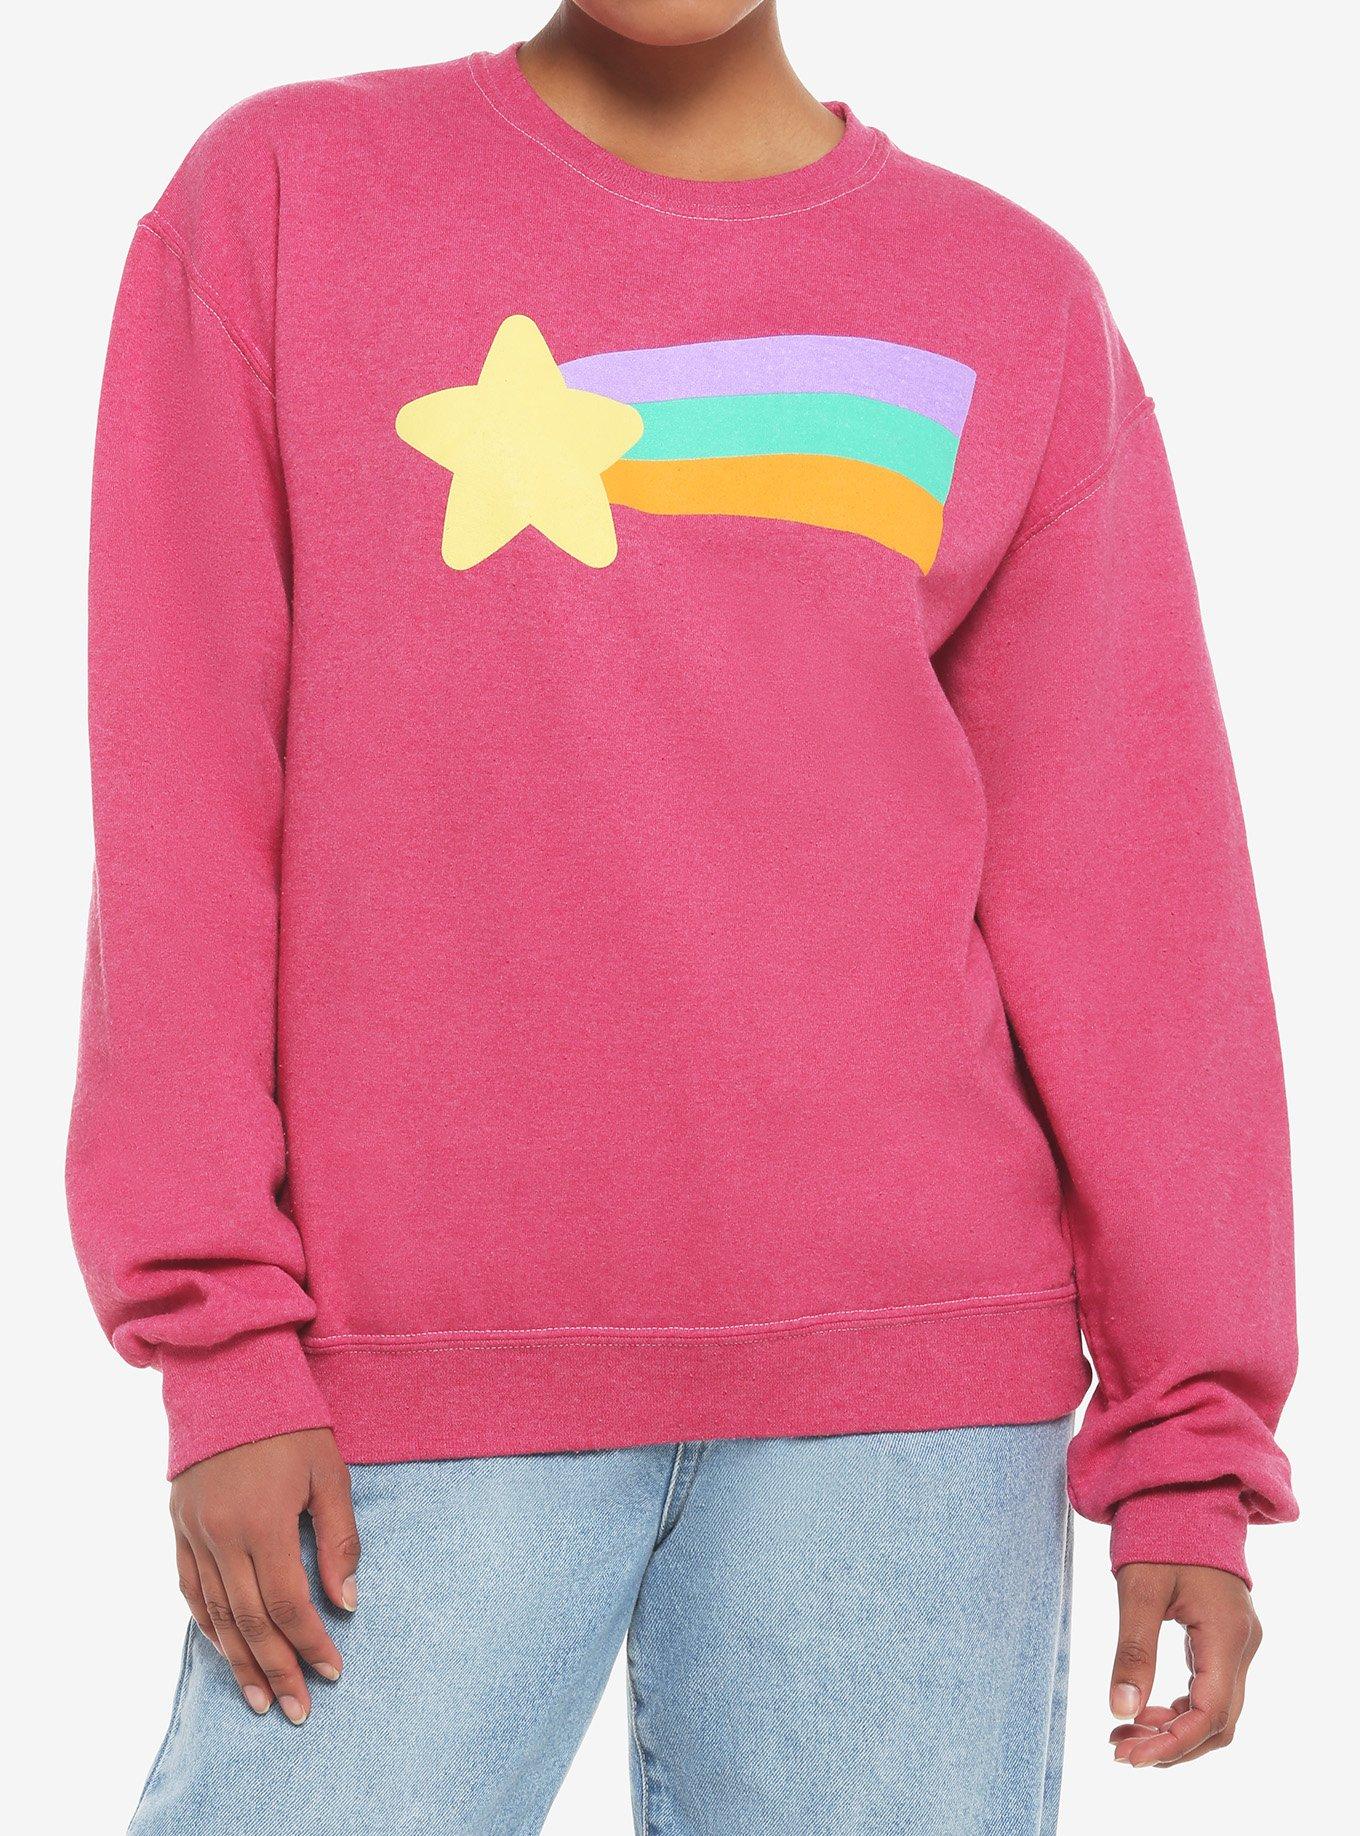 Bear Sweater Sweatshirt New Creative Design Sweater Gift 